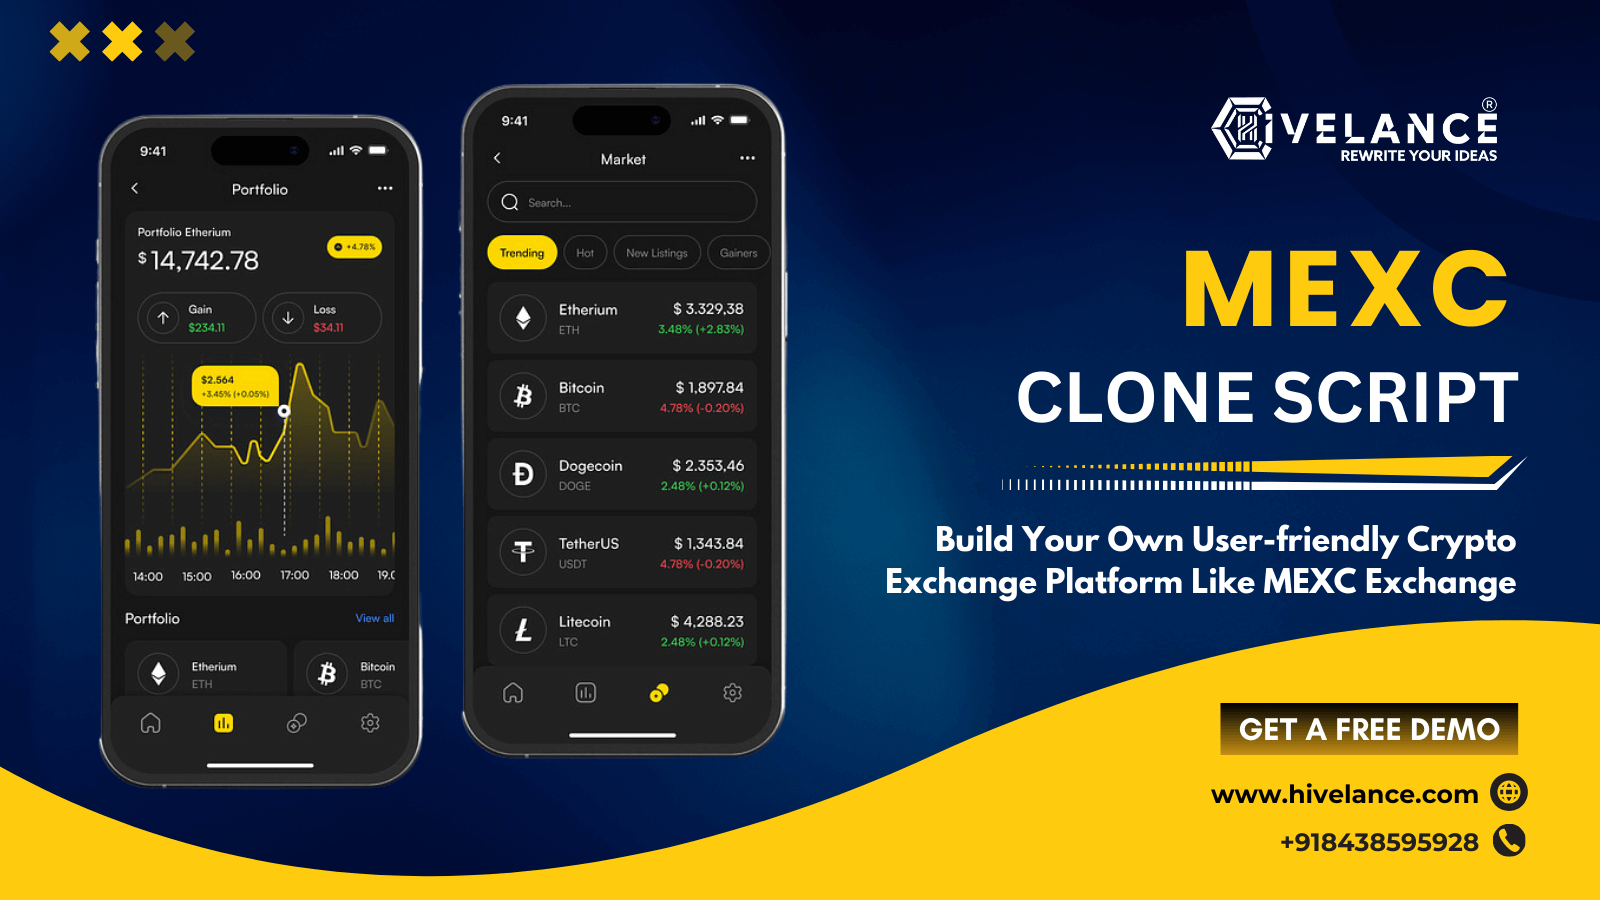 MEXC clone script - To Build Your User-friendly Exchange Platform Like MEXC Exchange